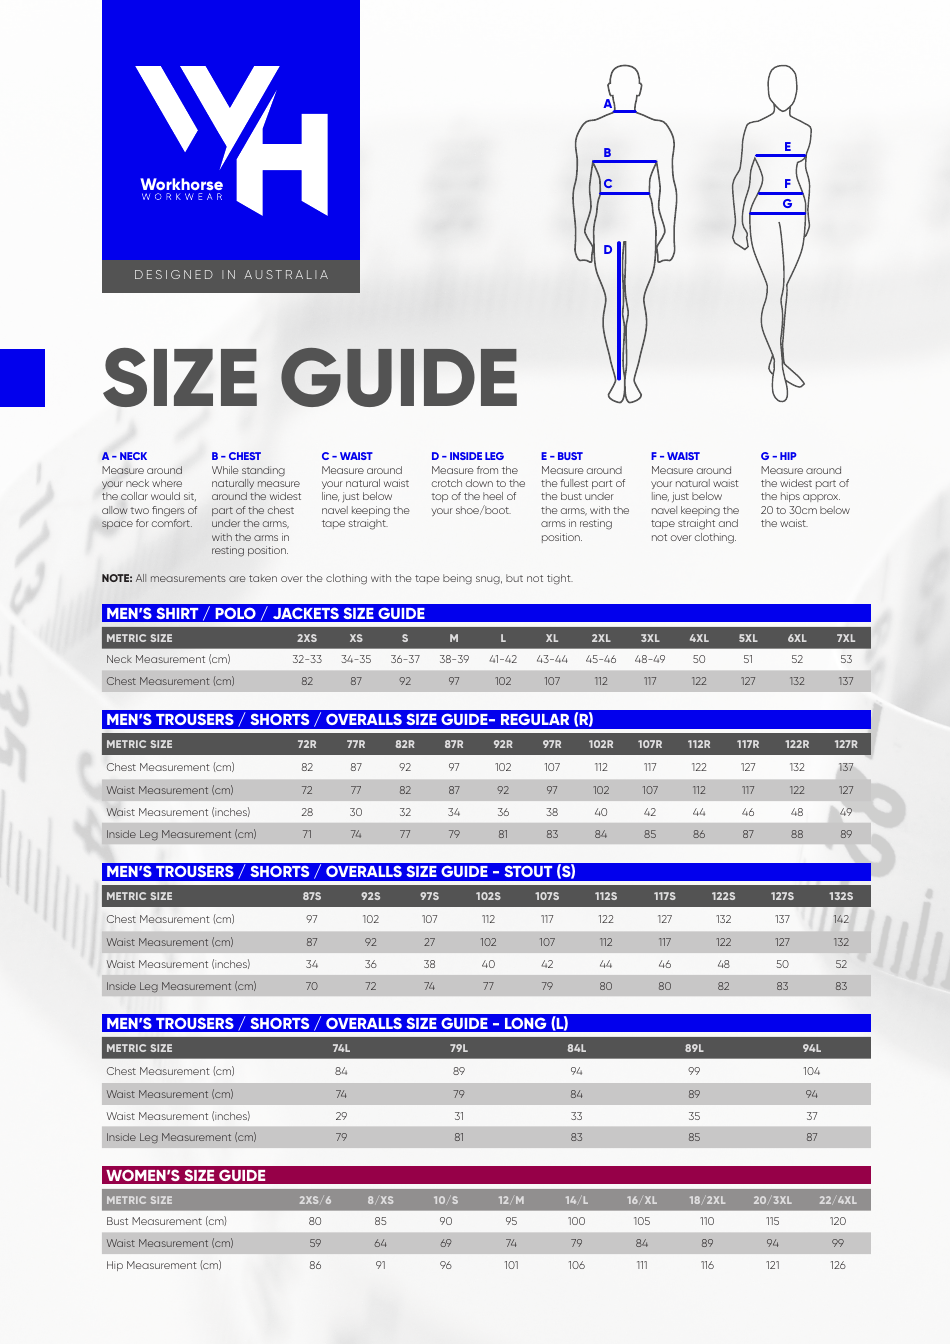 Workwear Size Chart - Workhorse, Page 1